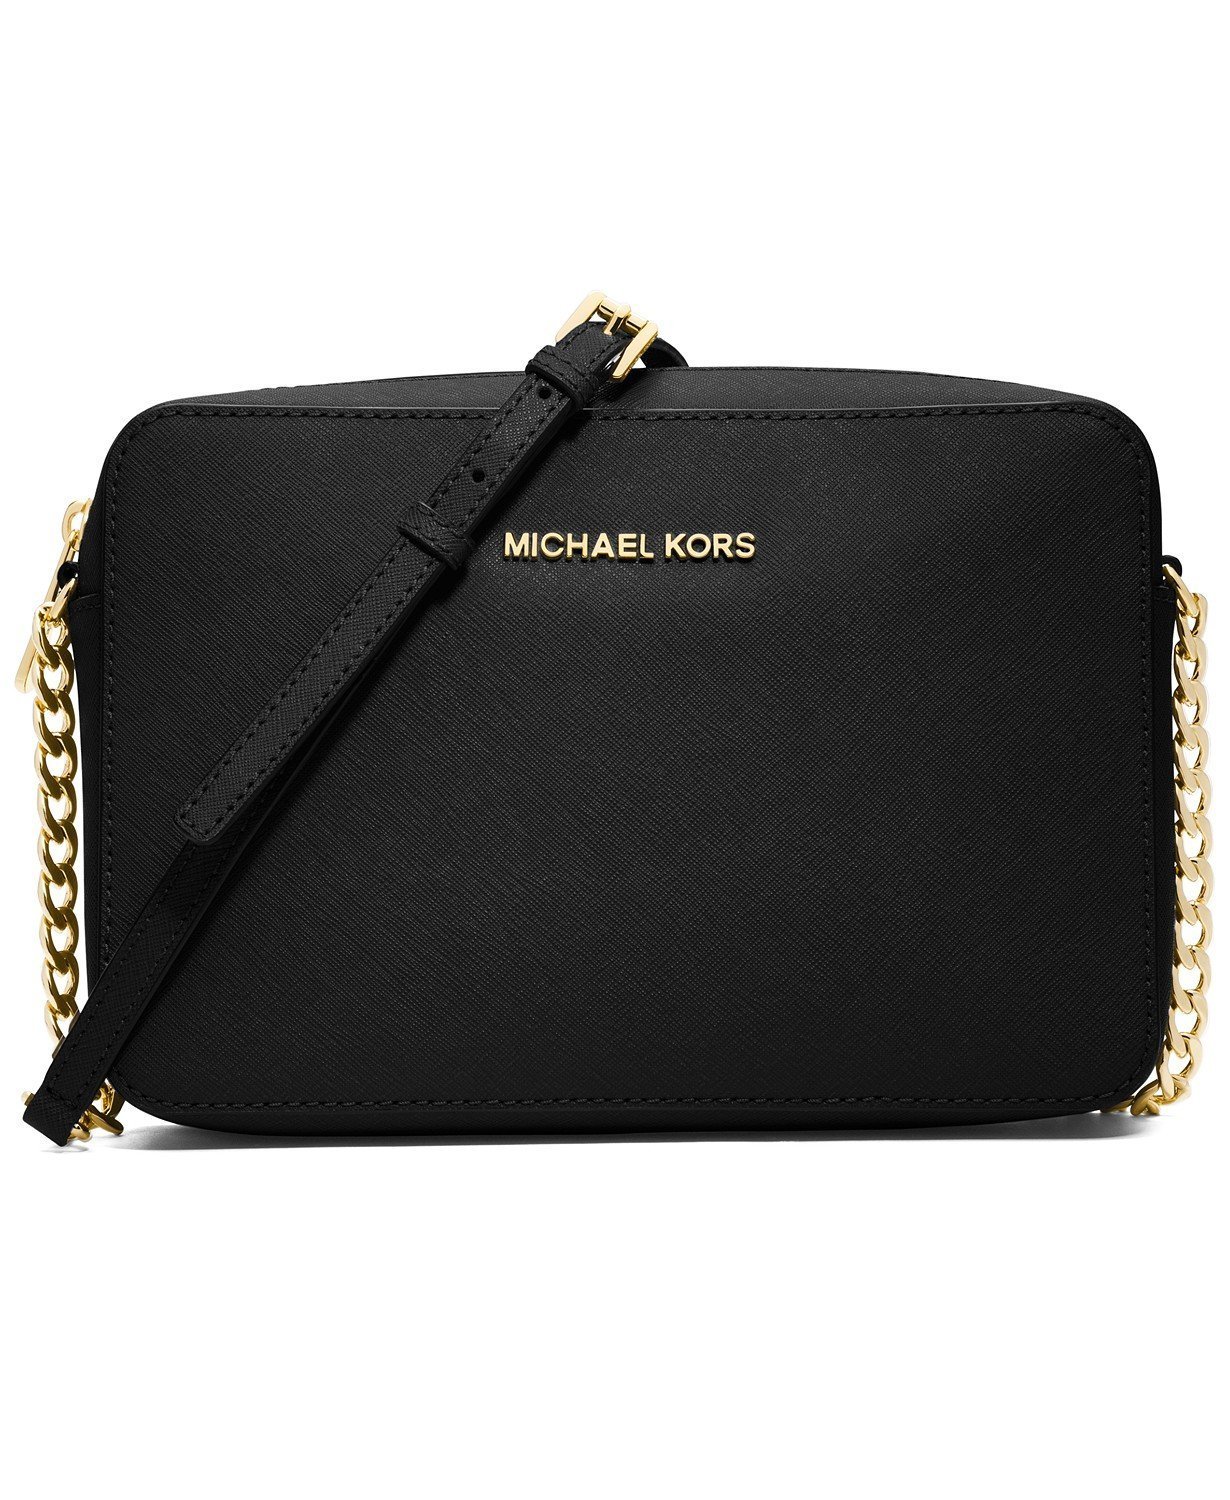 Michael Kors | Leather Handbags | Jet 